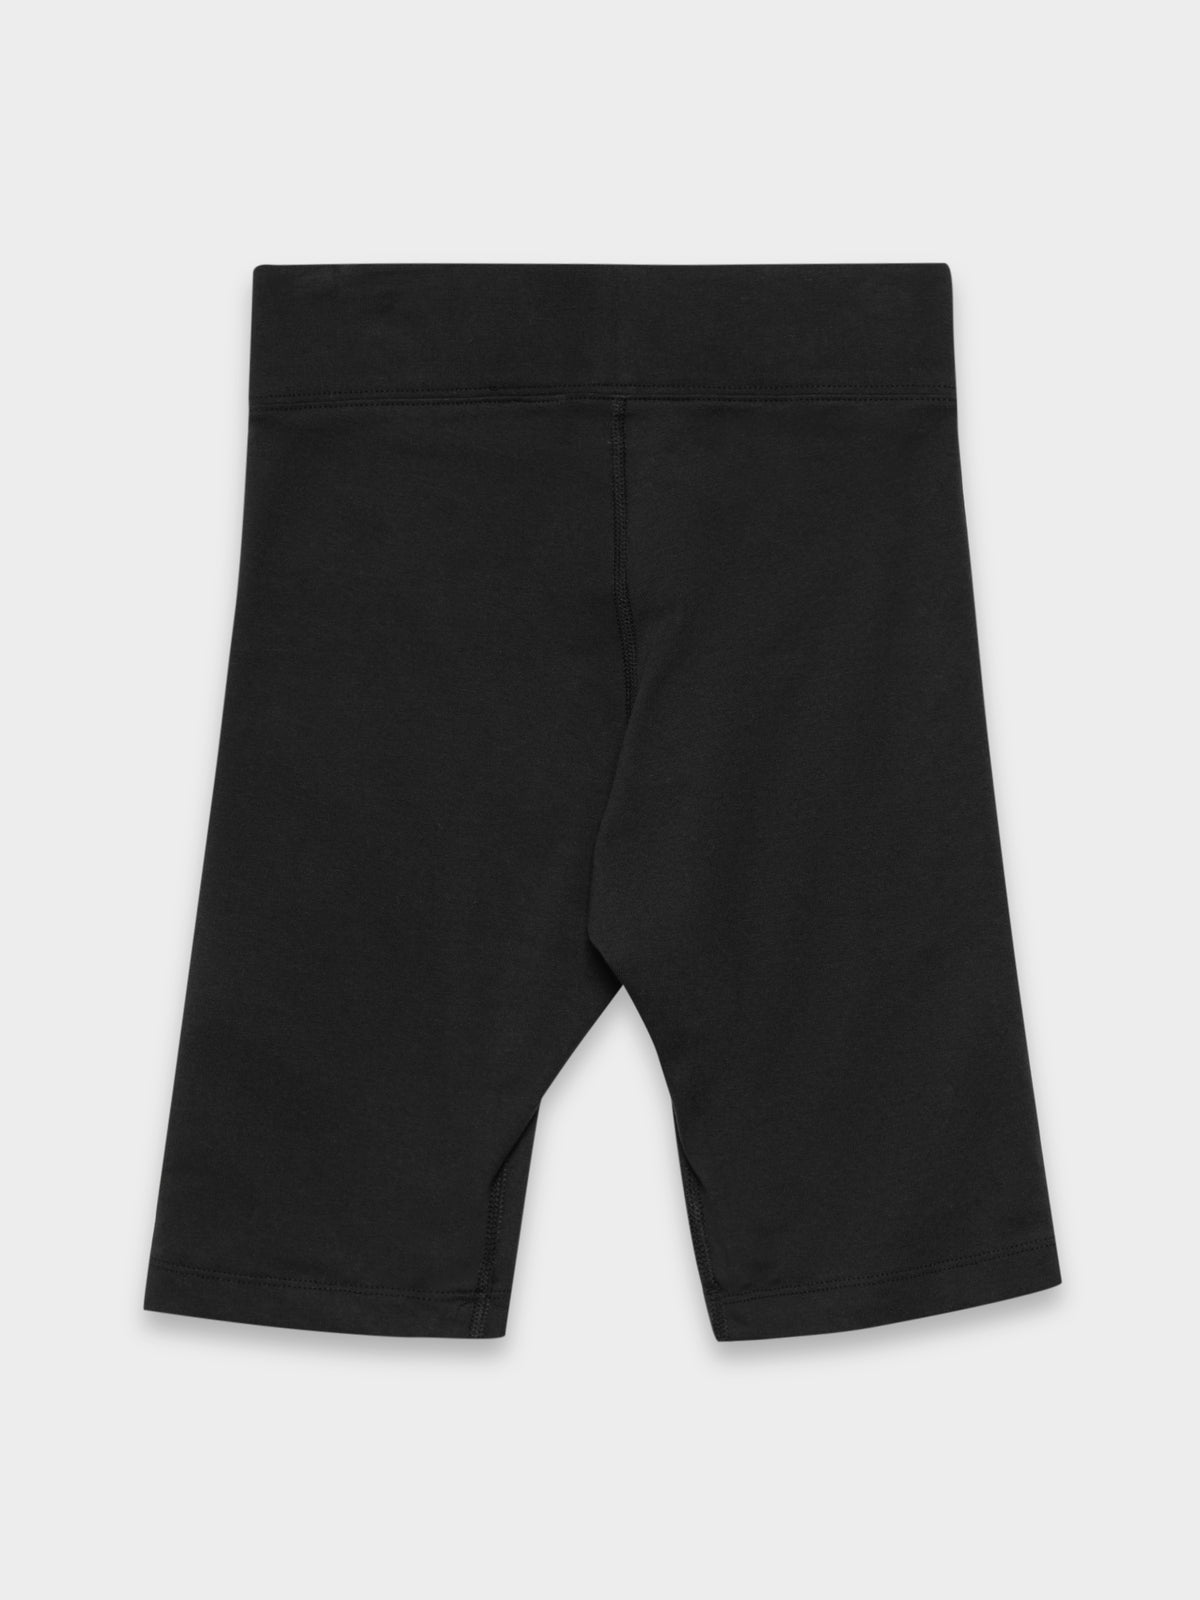 Sportswear Essential Mid-Rise Bike Shorts in Black